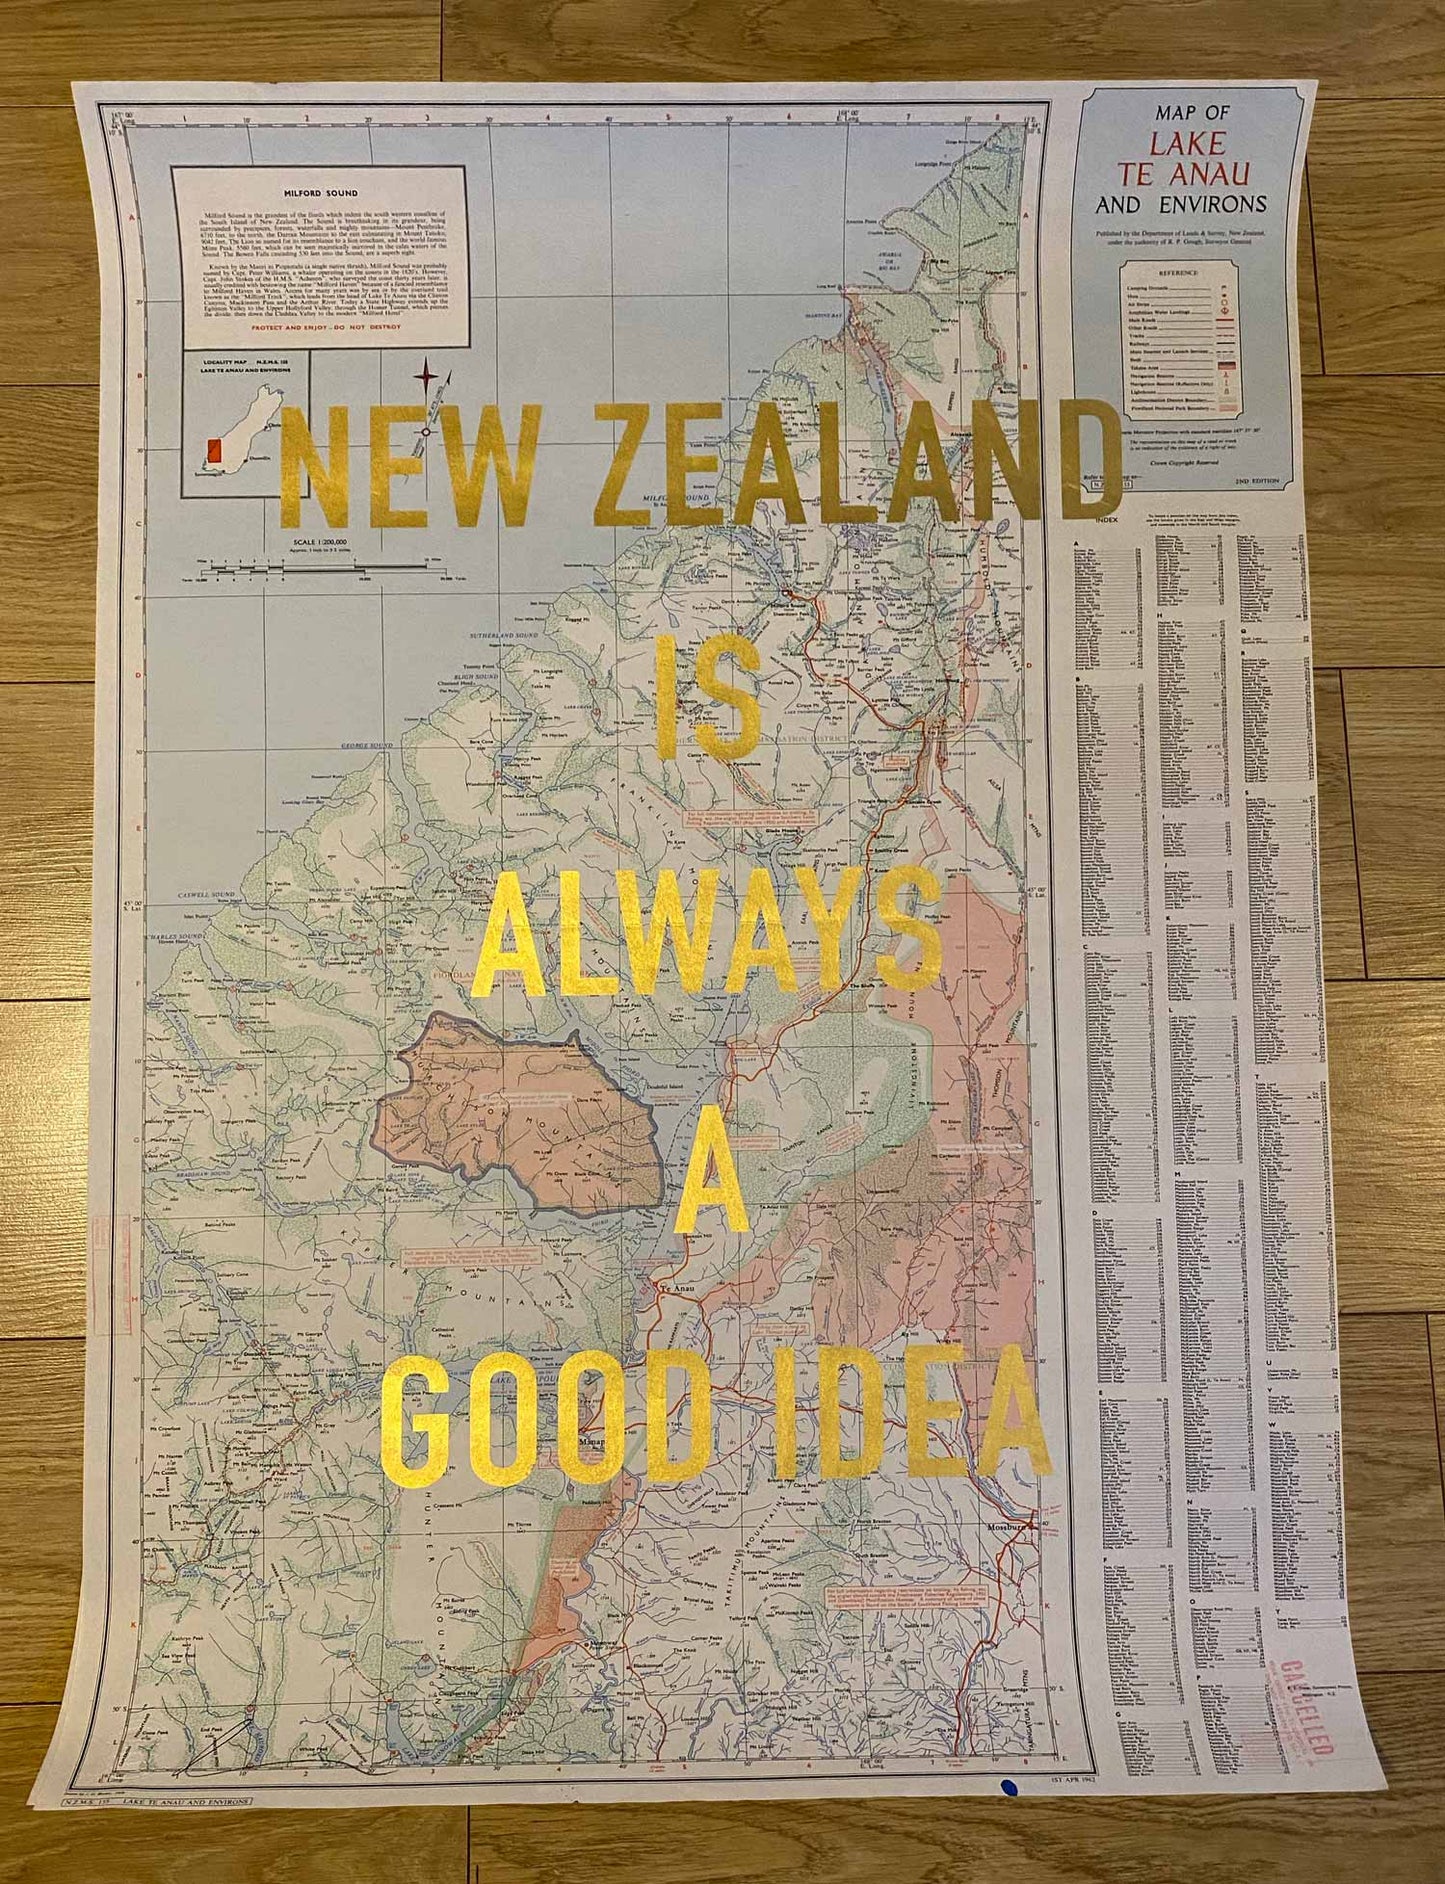 New Zealand is Always a Good Idea (Milford Sound)